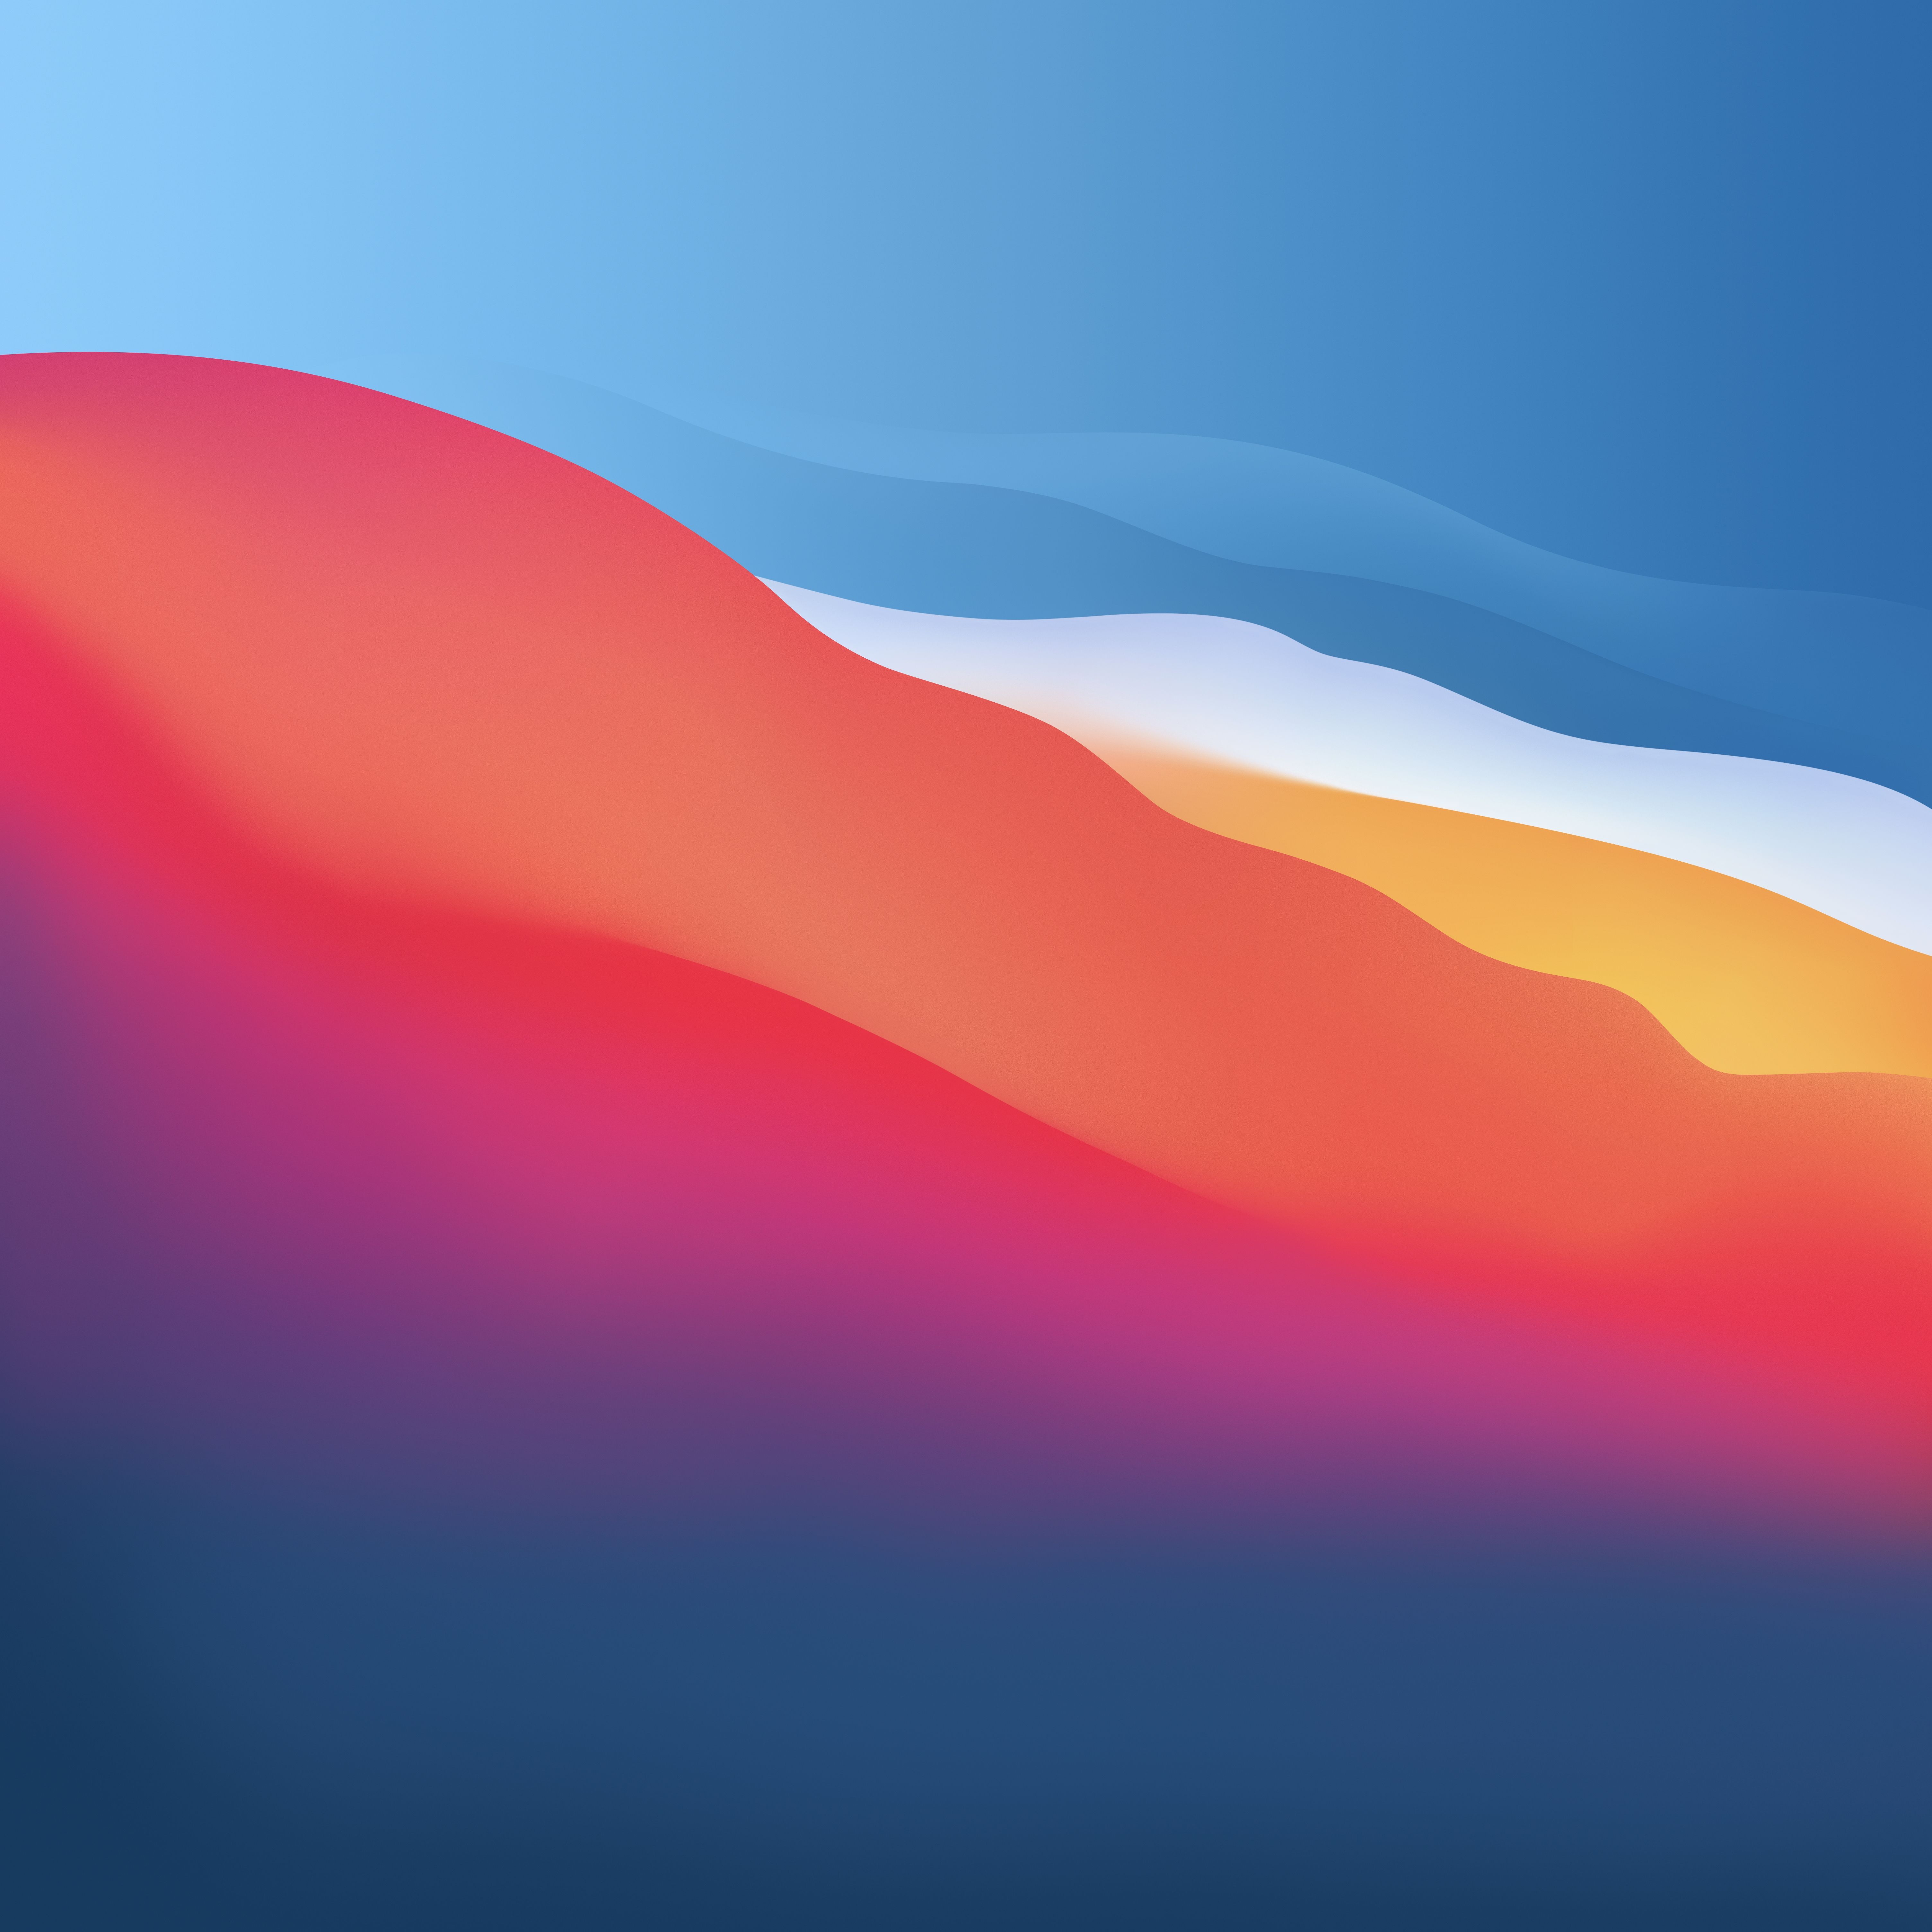 macOS Big Sur Wallpaper 4K, Colorful, Waves, Smooth, Gradients